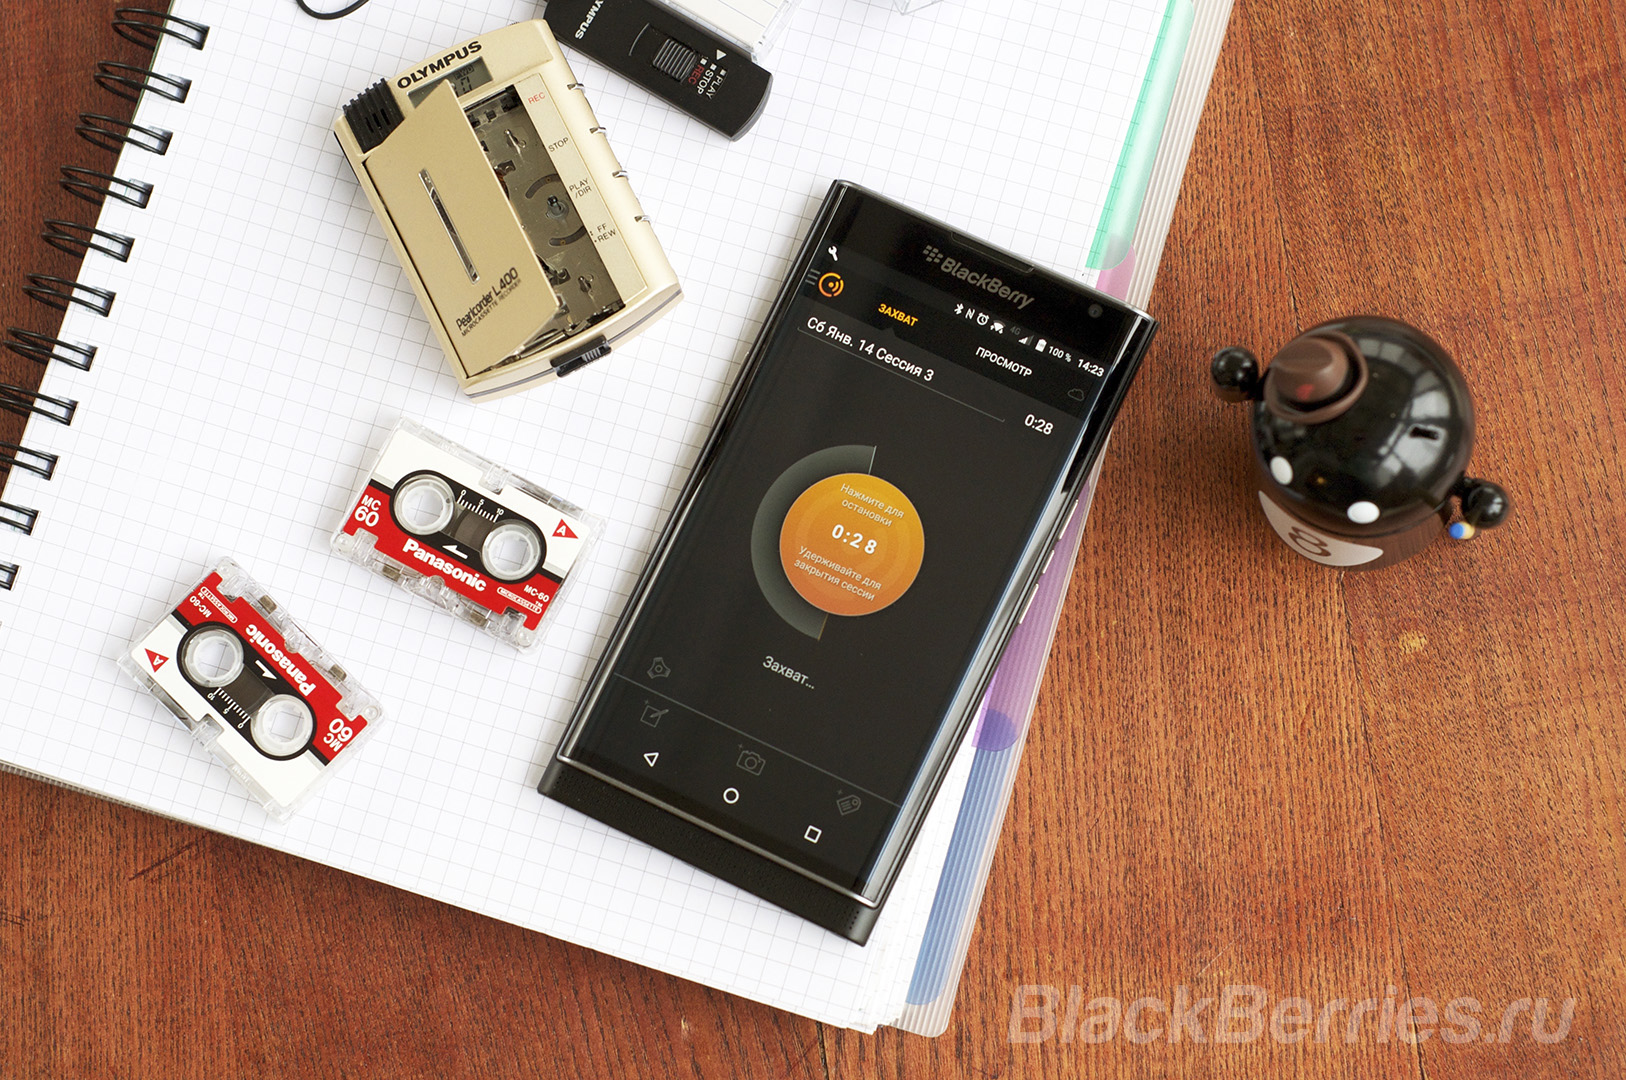 BlackBerry-Android-Recorder-12.jpg